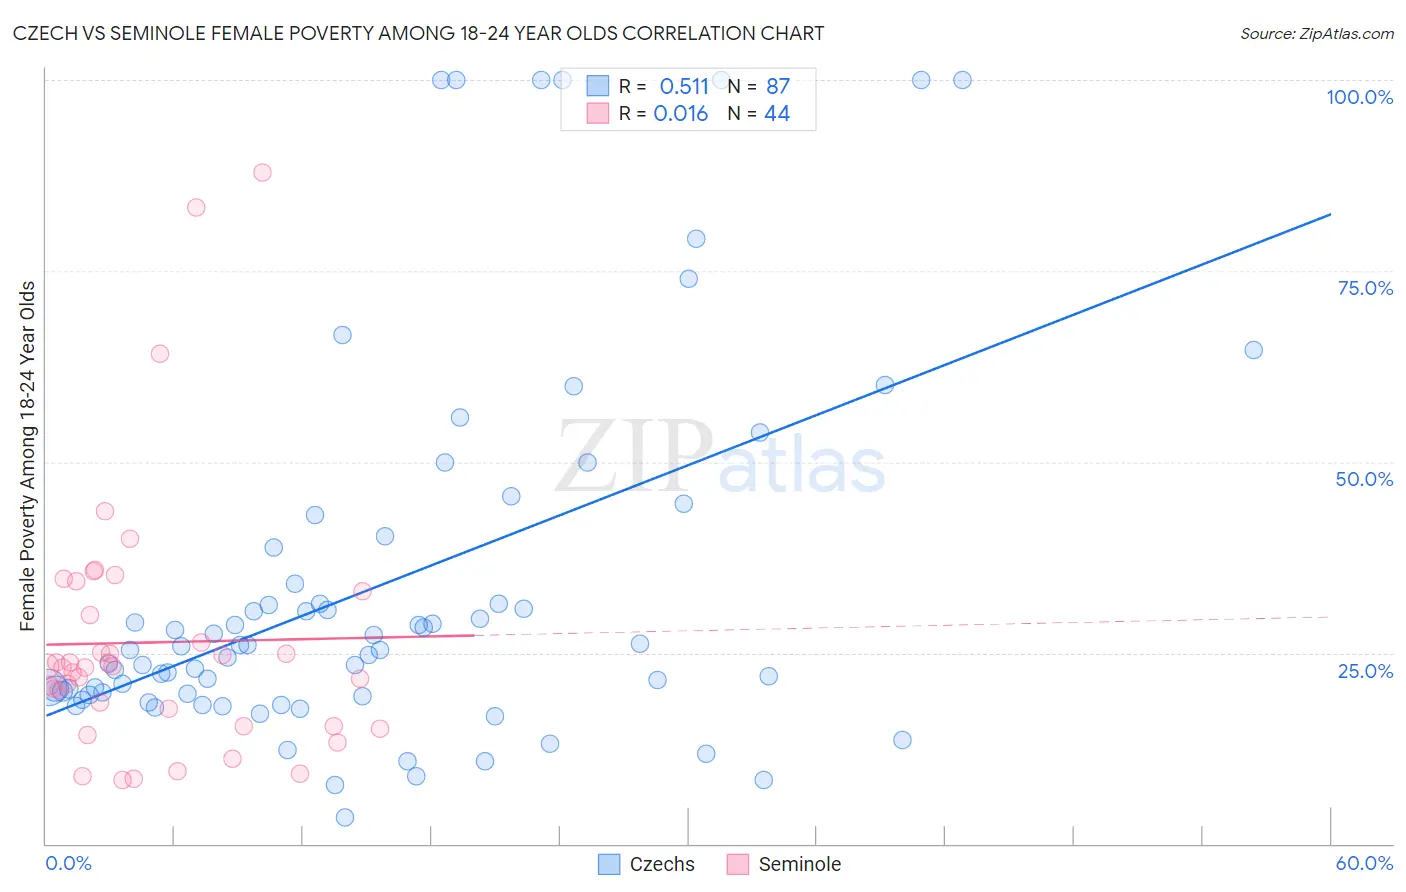 Czech vs Seminole Female Poverty Among 18-24 Year Olds